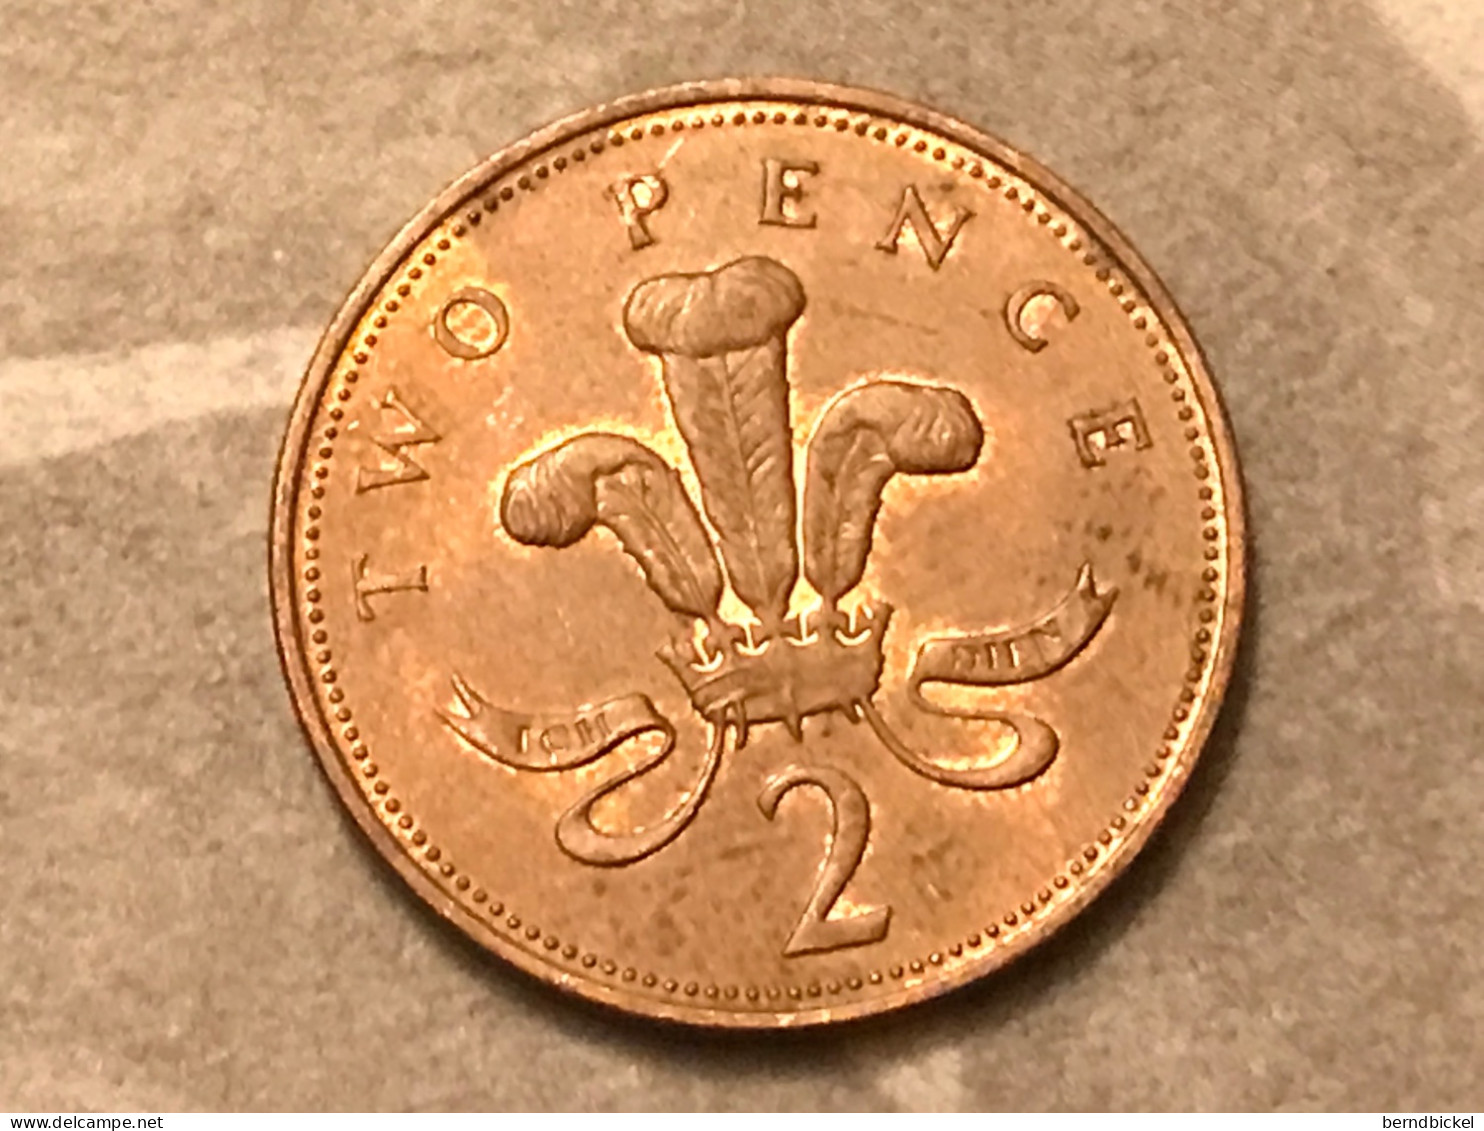 Münze Münzen Umlaufmünze Großbritannien 2 Pence 1994 - 2 Pence & 2 New Pence